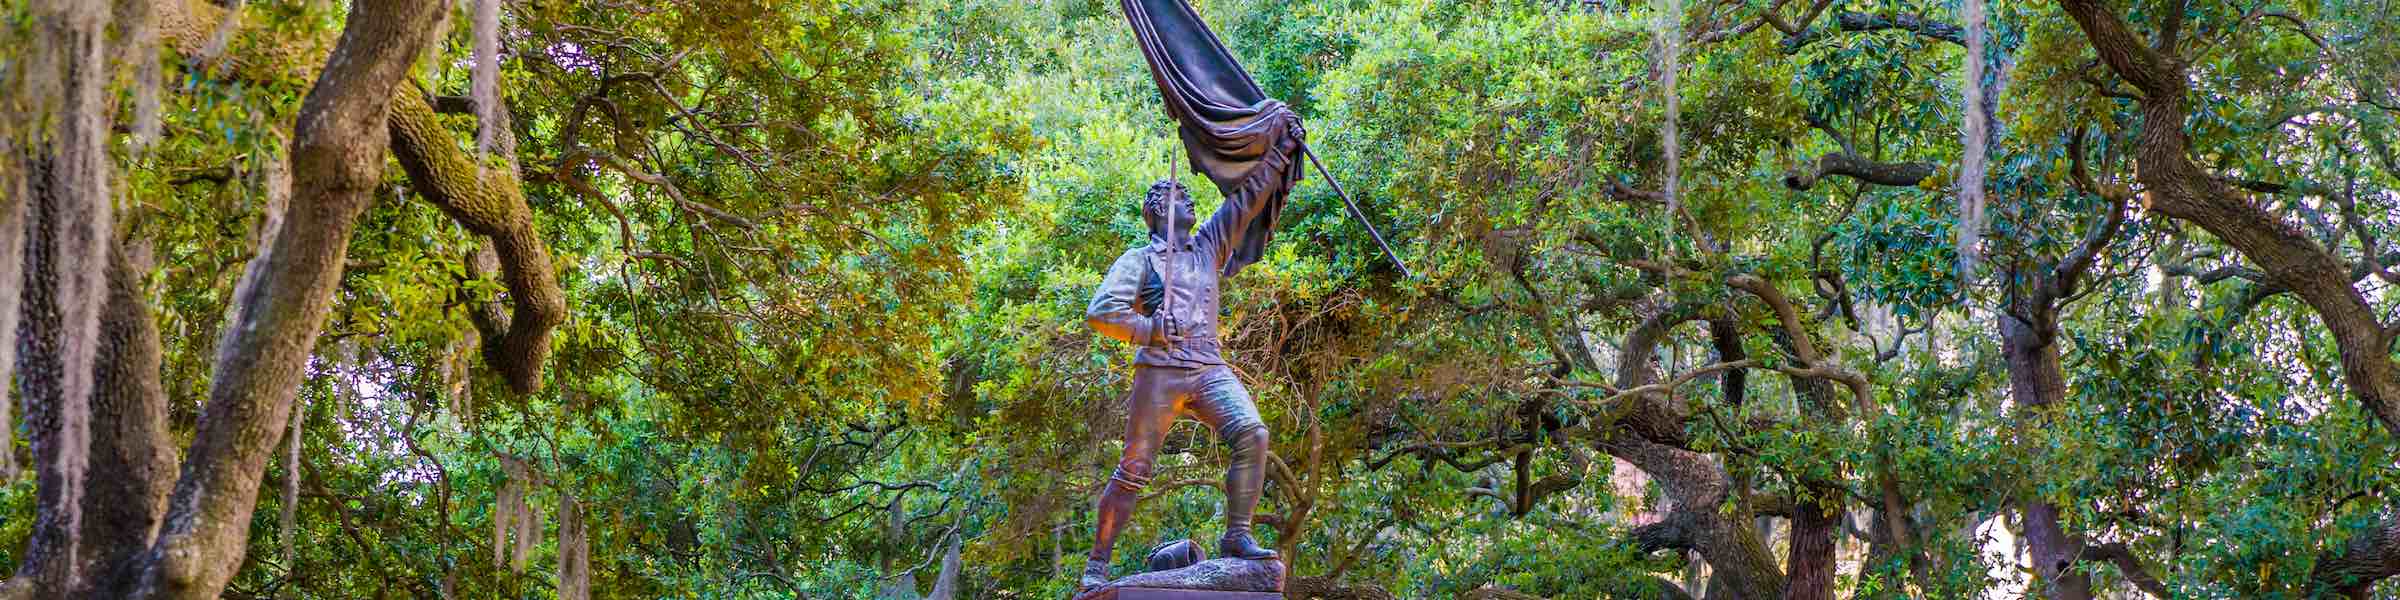 Jasper Monument, in Madison Square, Savannah, GA.